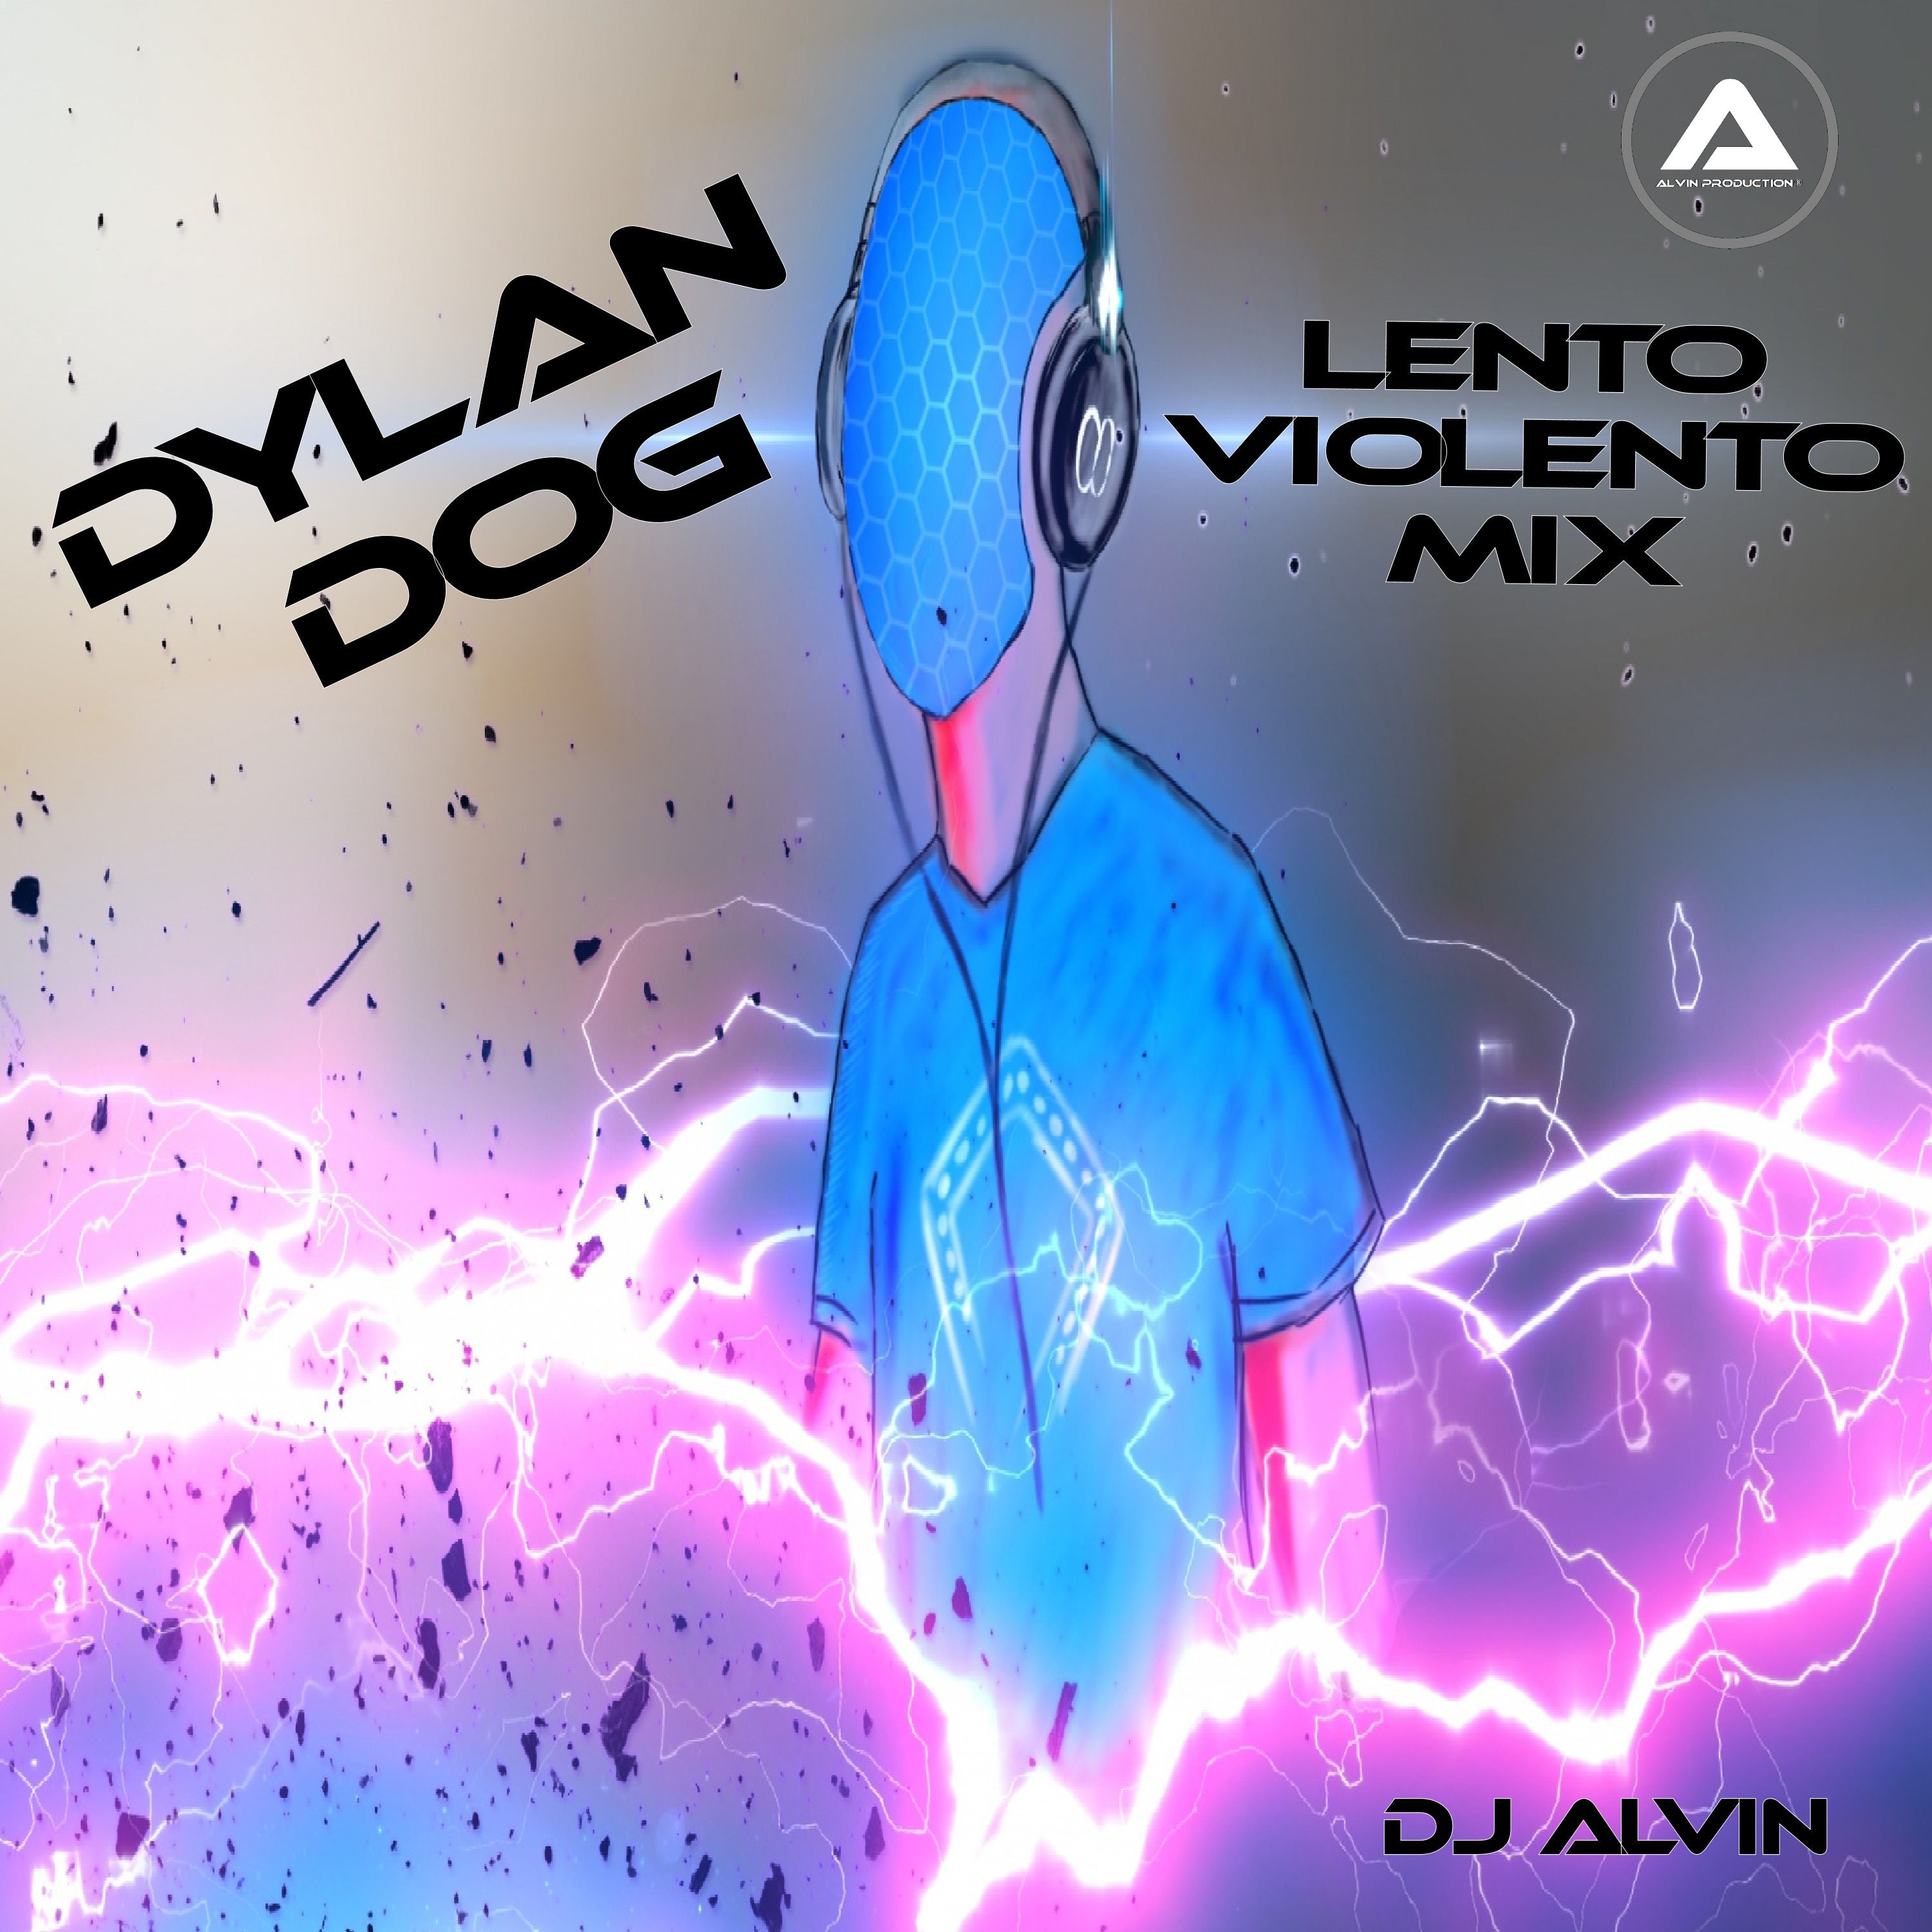  ★ Dylan Dog (Lento Violento Mix) ★ 